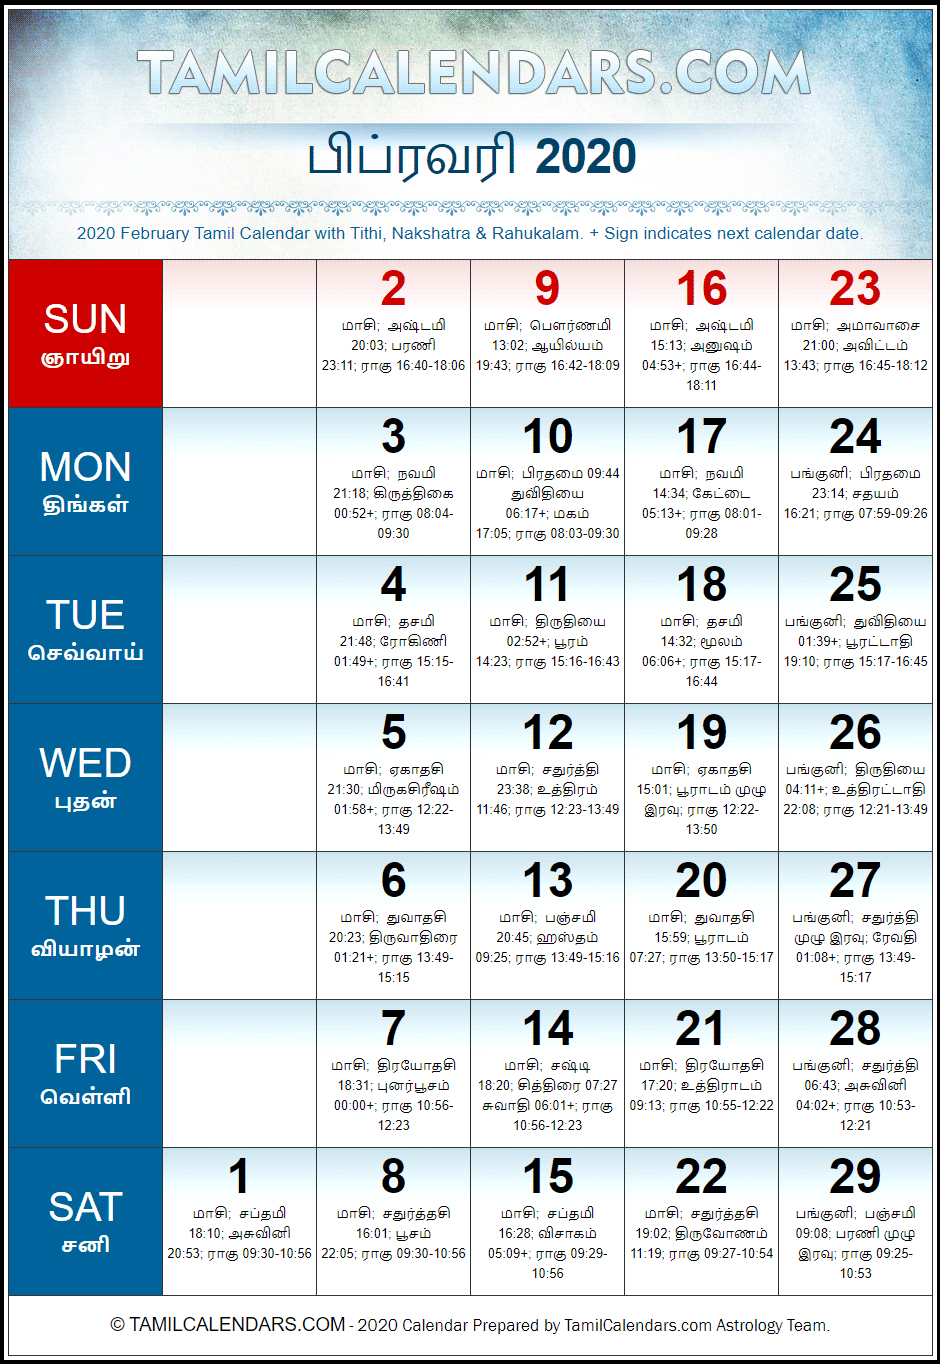 February 2020 Tamil Calendar